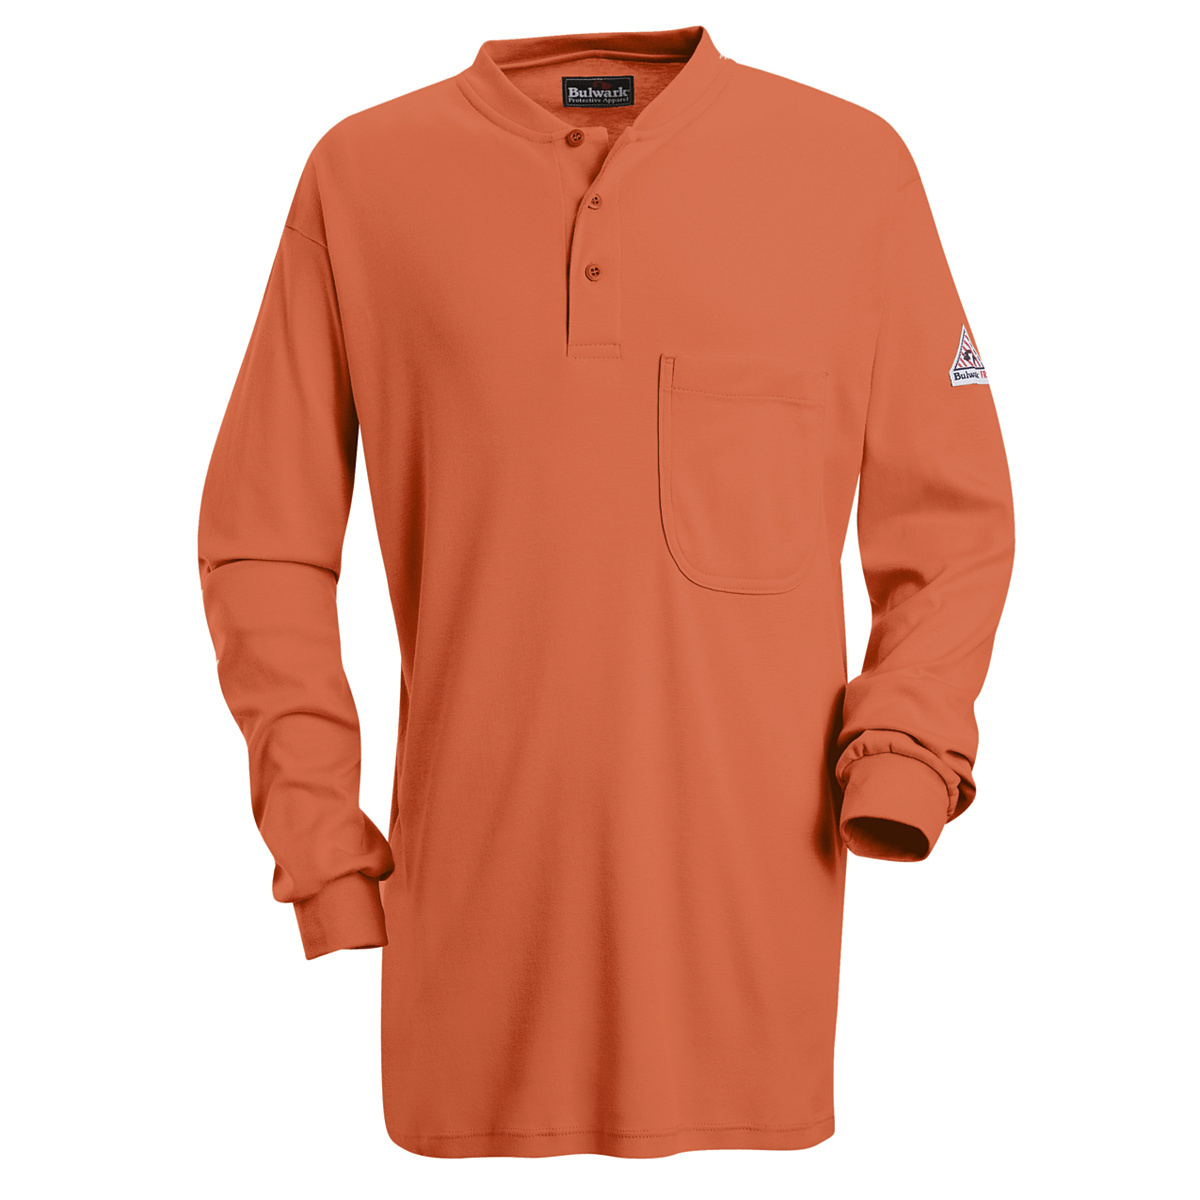 Bulwark® Medium Regular Orange EXCEL FR® Interlock FR Cotton Flame Resistant Henley Shirt With Button Front Closure